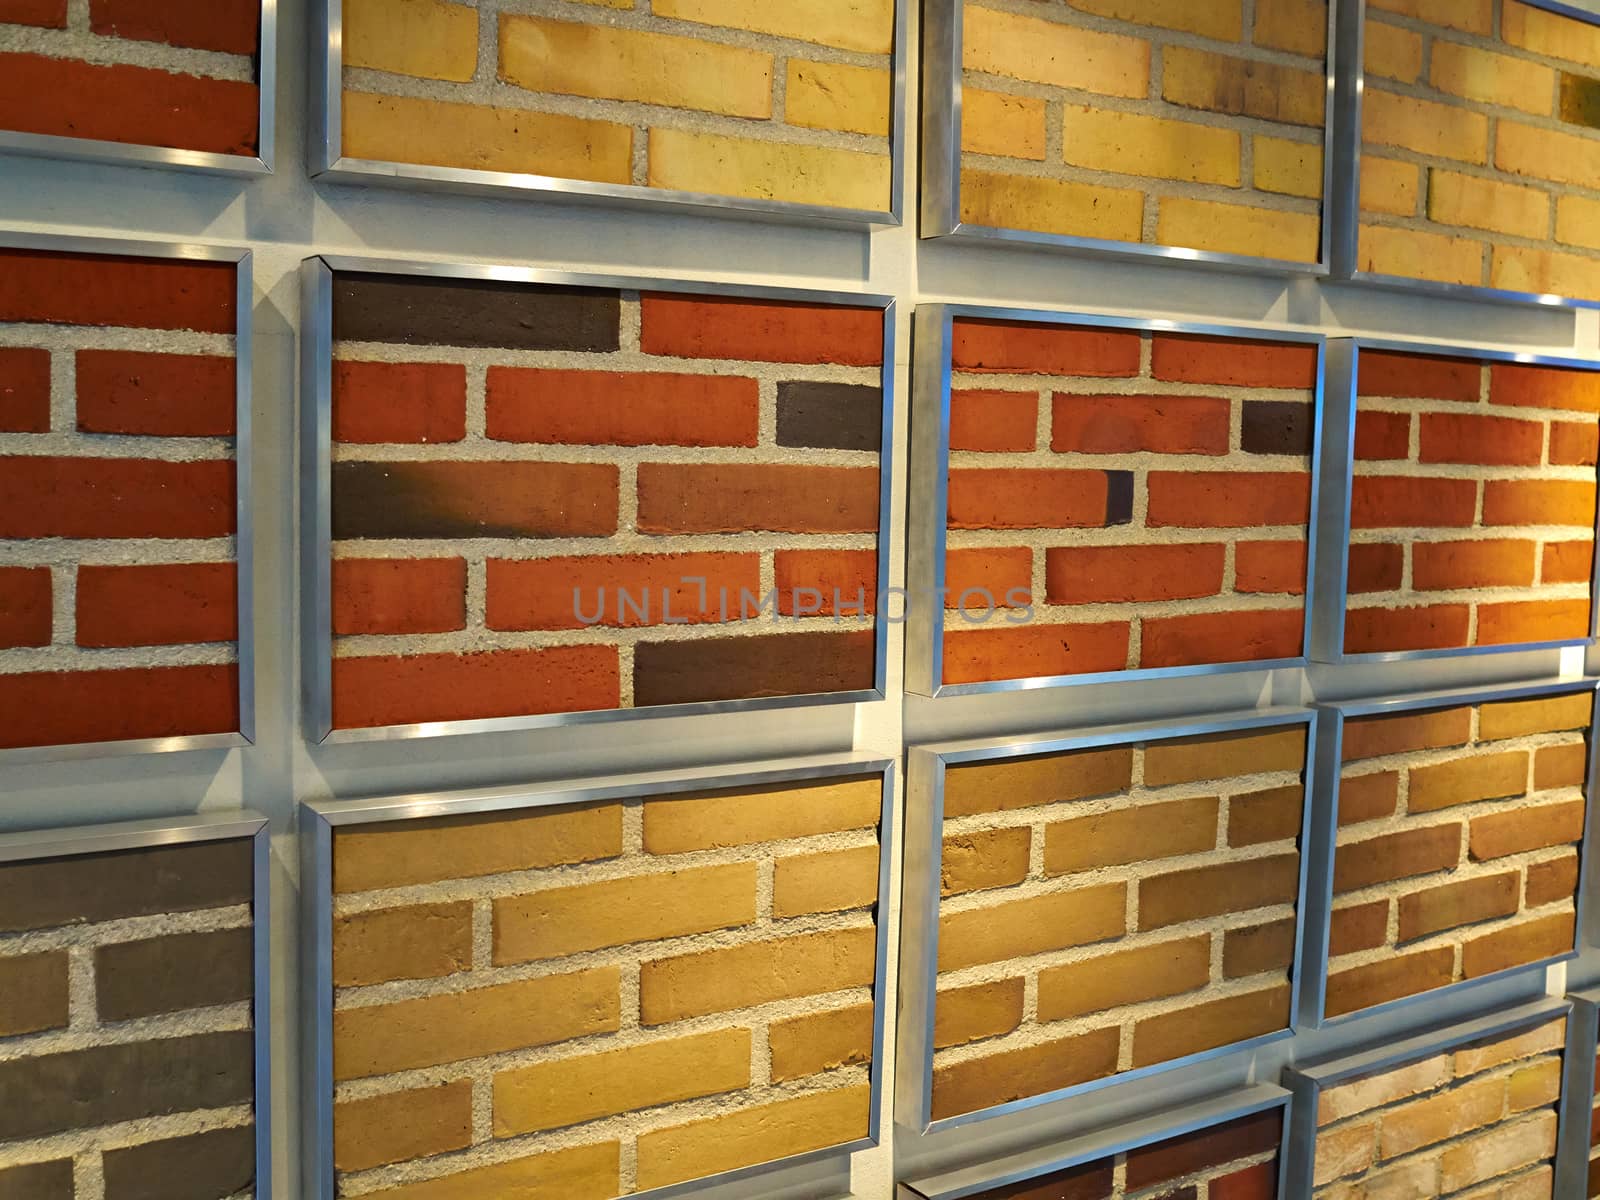 Decorative bricks on display by Ronyzmbow